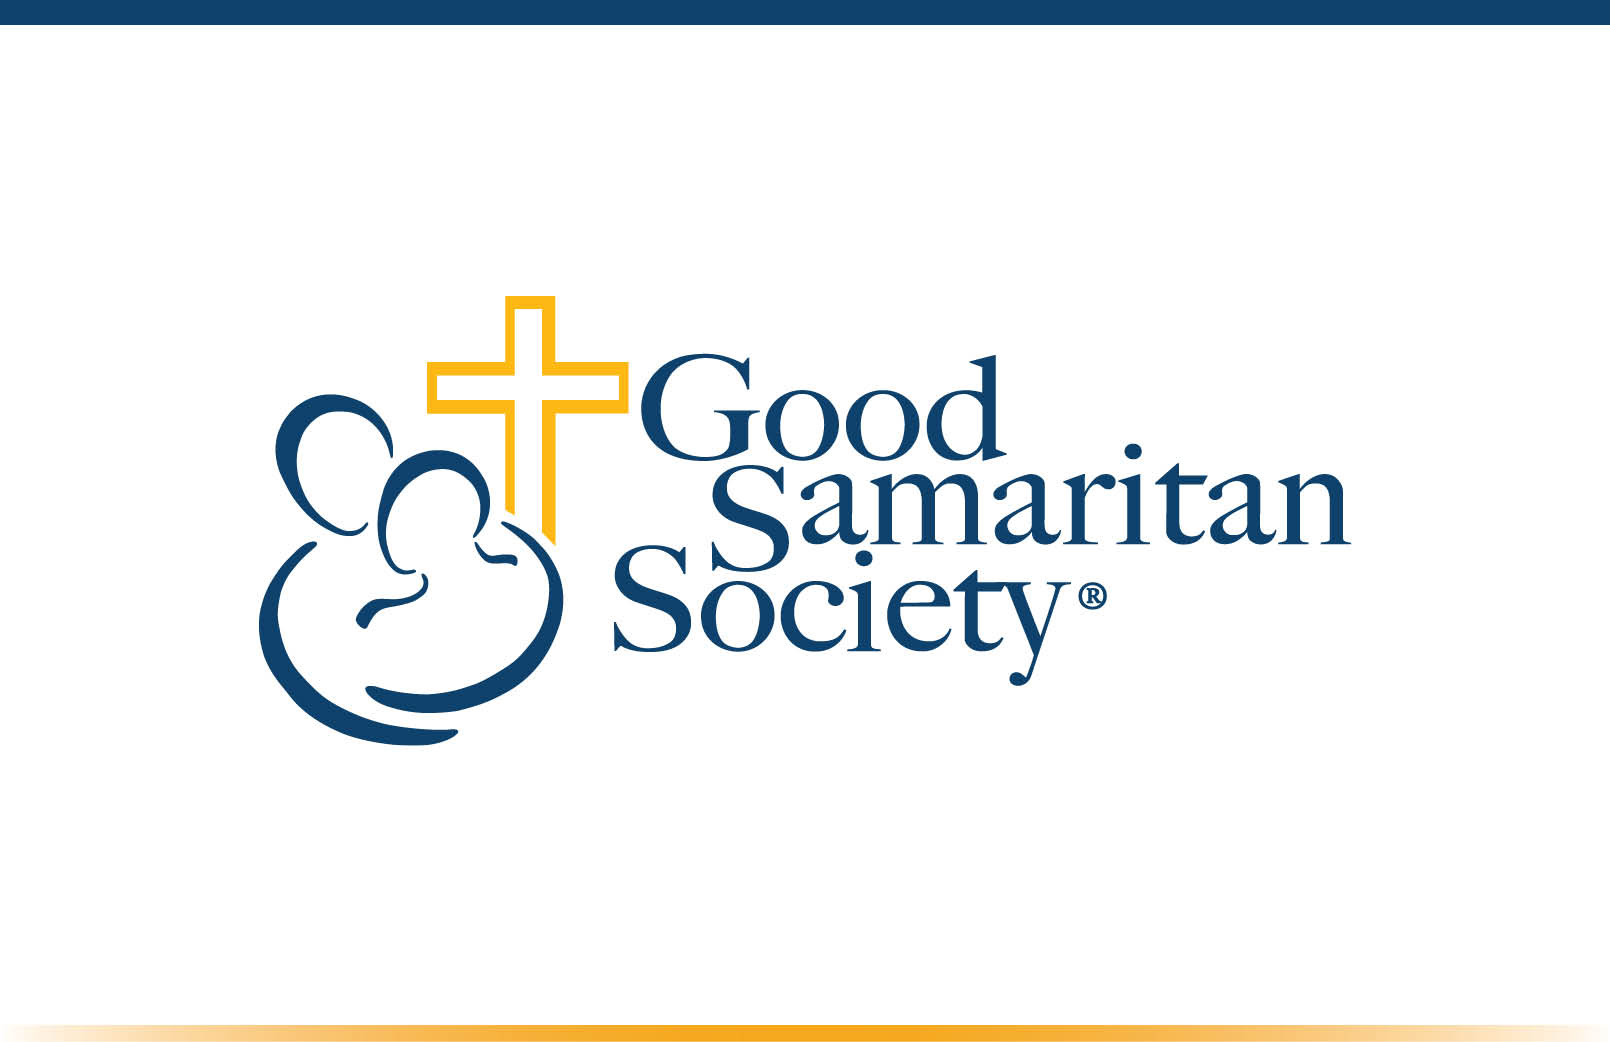 Good Samaritan Society announces ‘landmark’ development to put living space, services under one roof